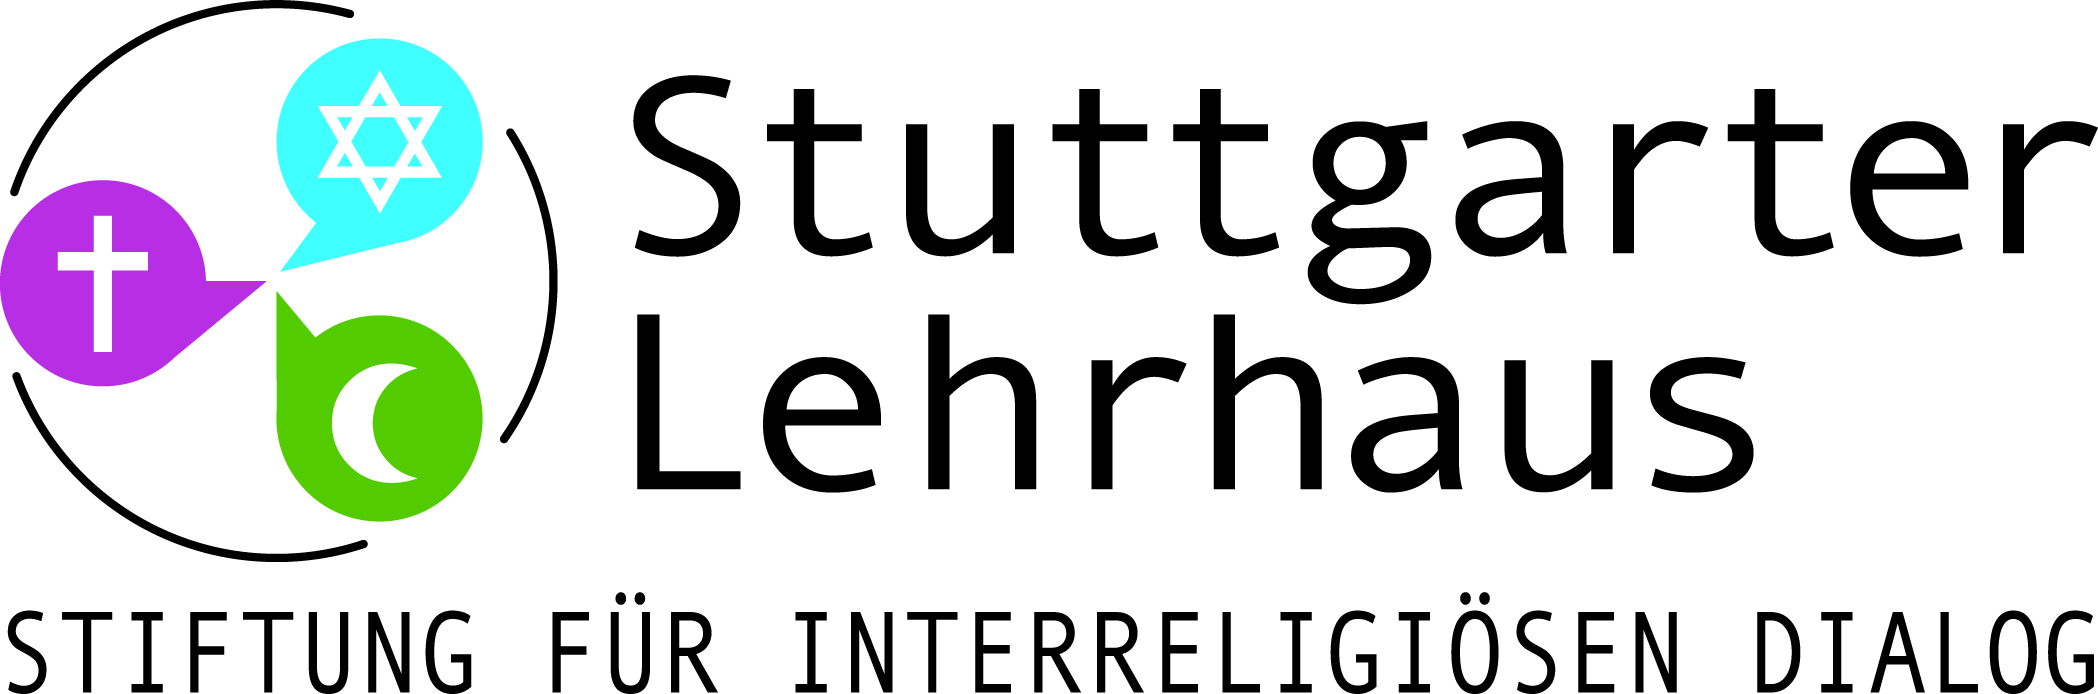 Stuttgarter Lehrhaus Logo 2016